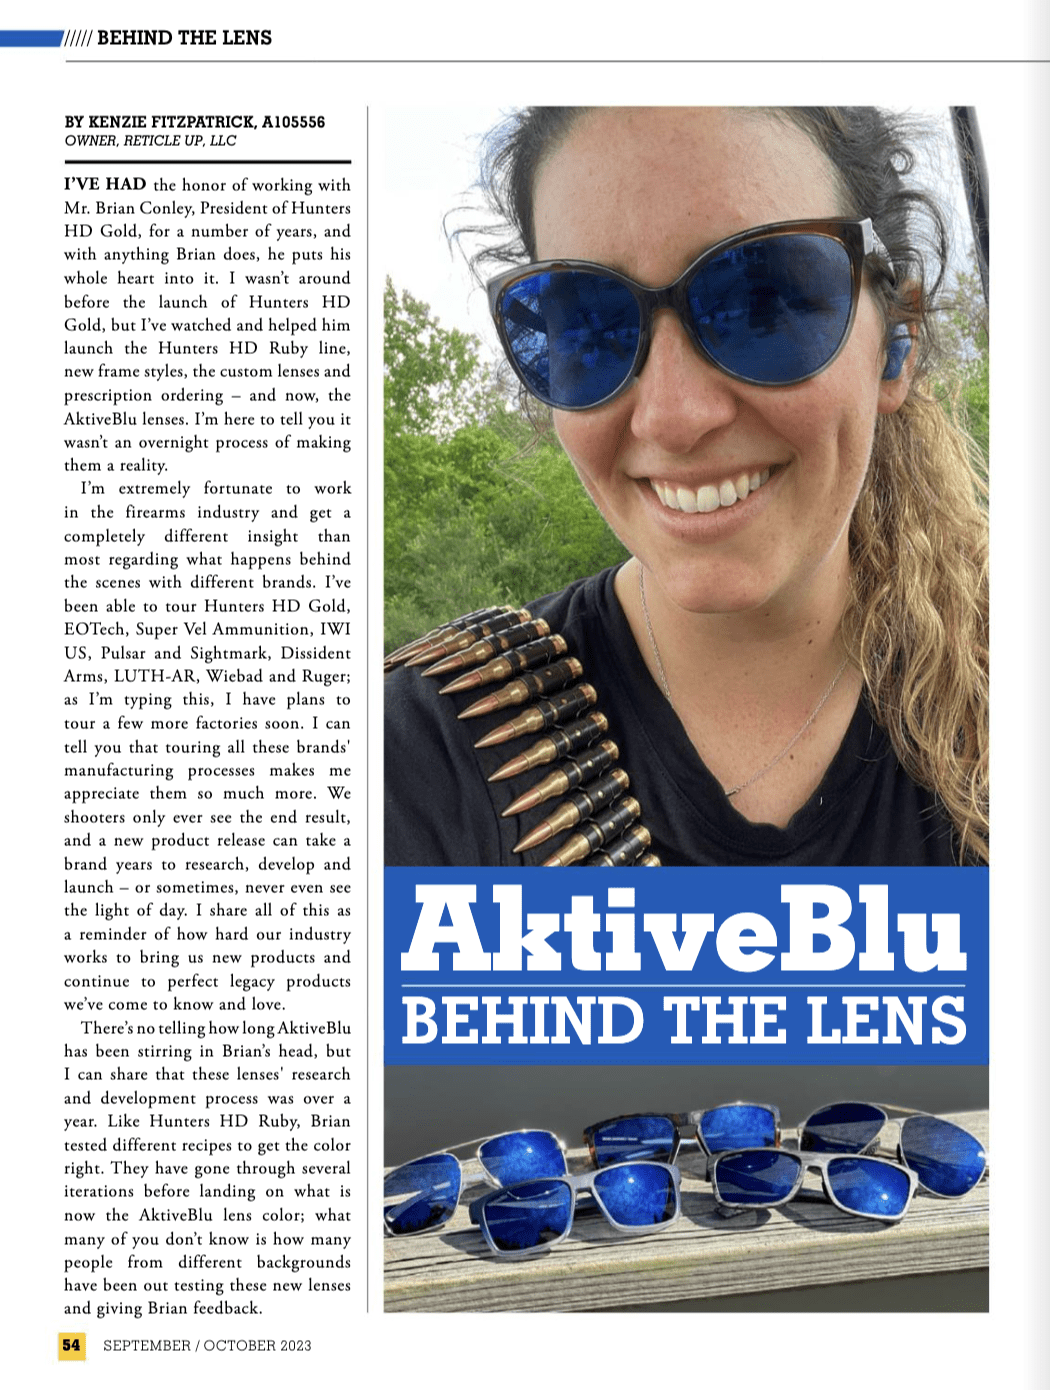 AktiveBlu: Behind the Lens